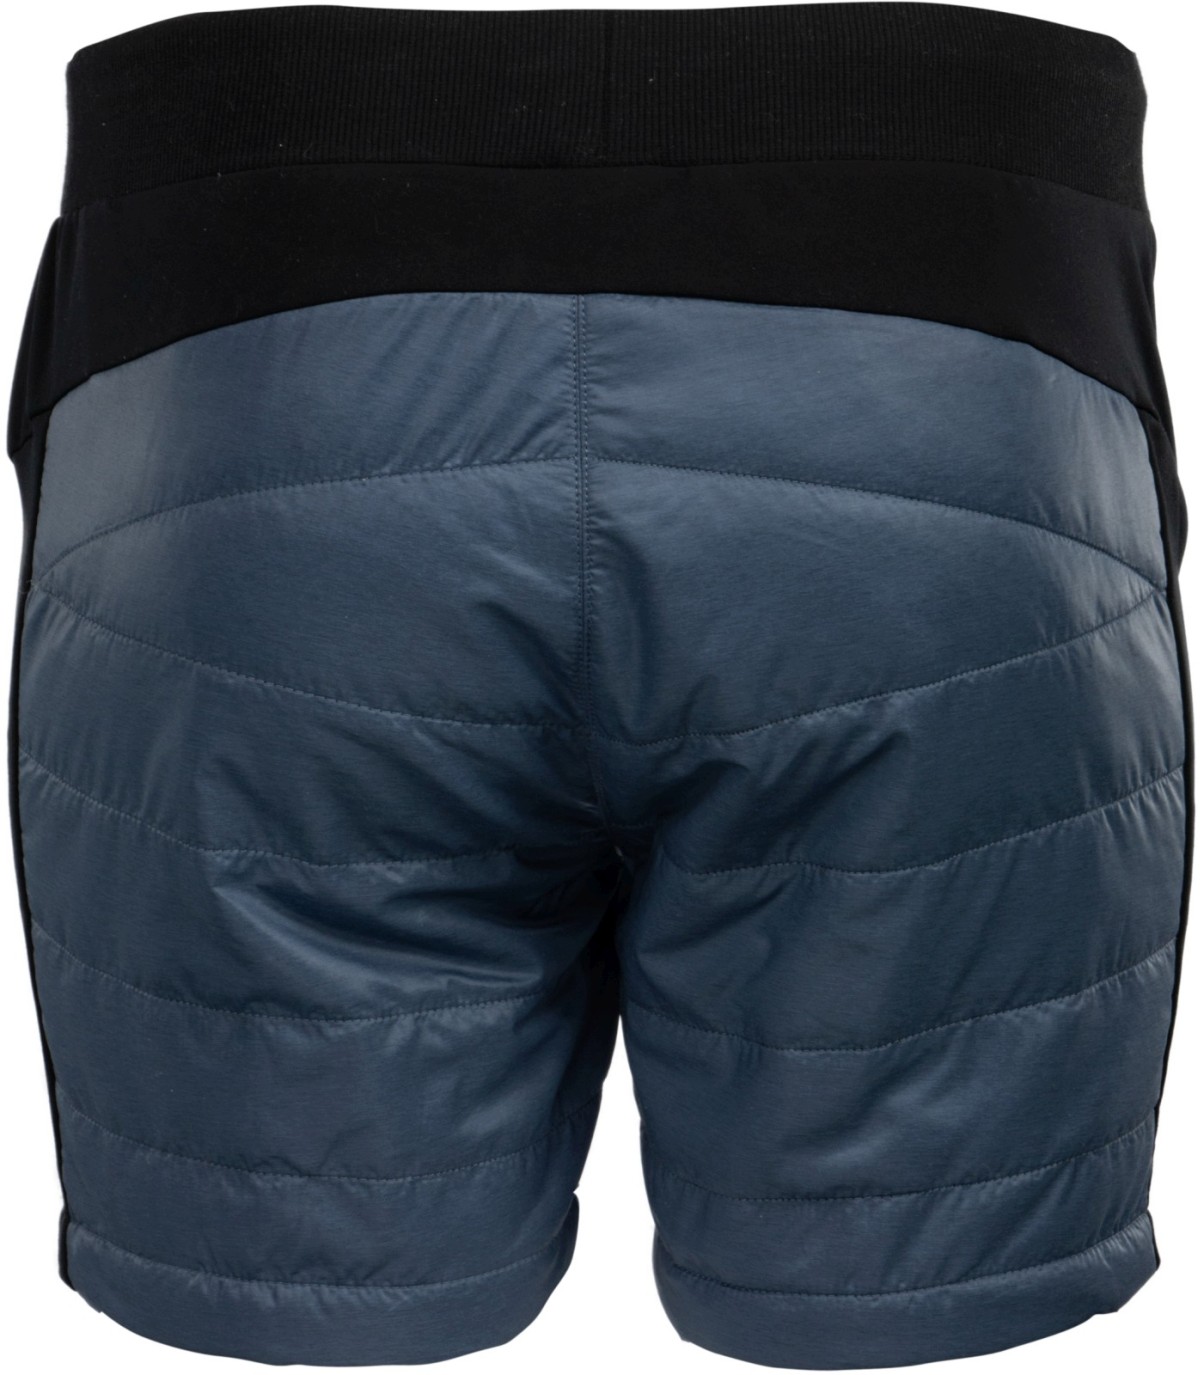 Women’s insulated shorts